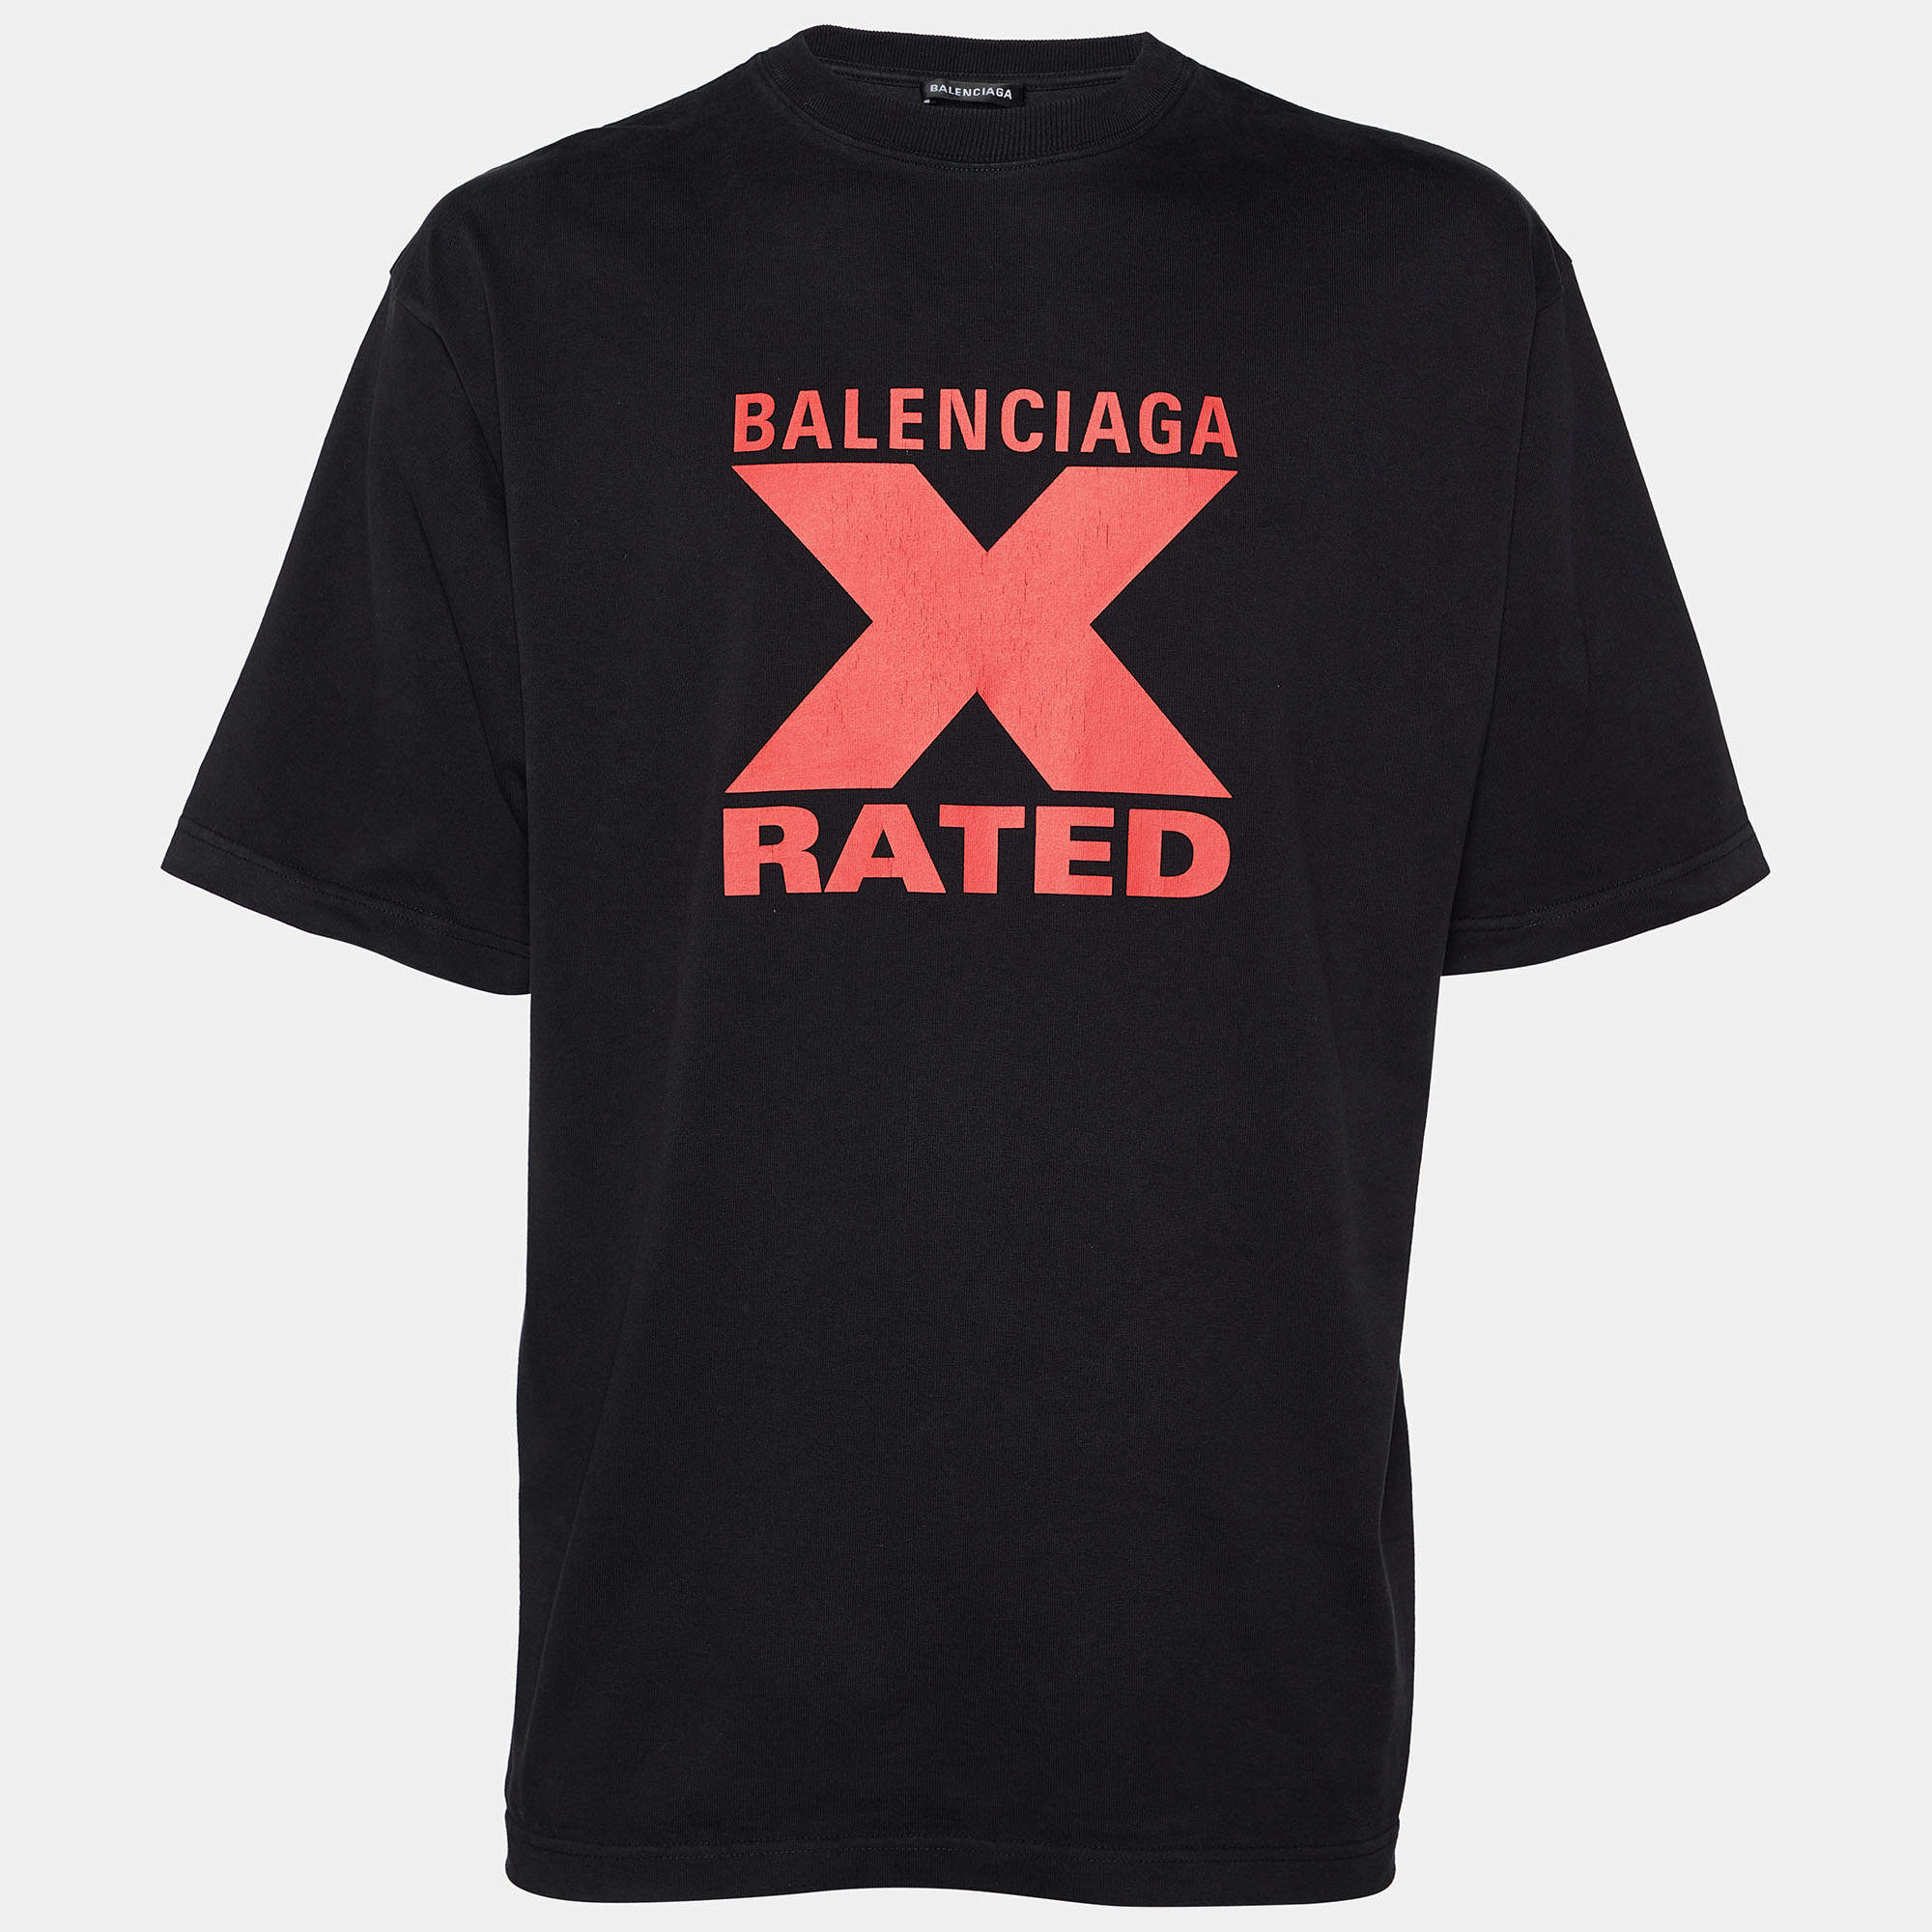 Balenciaga Black X Rated Printed Cotton Knit Oversized T-Shirt S